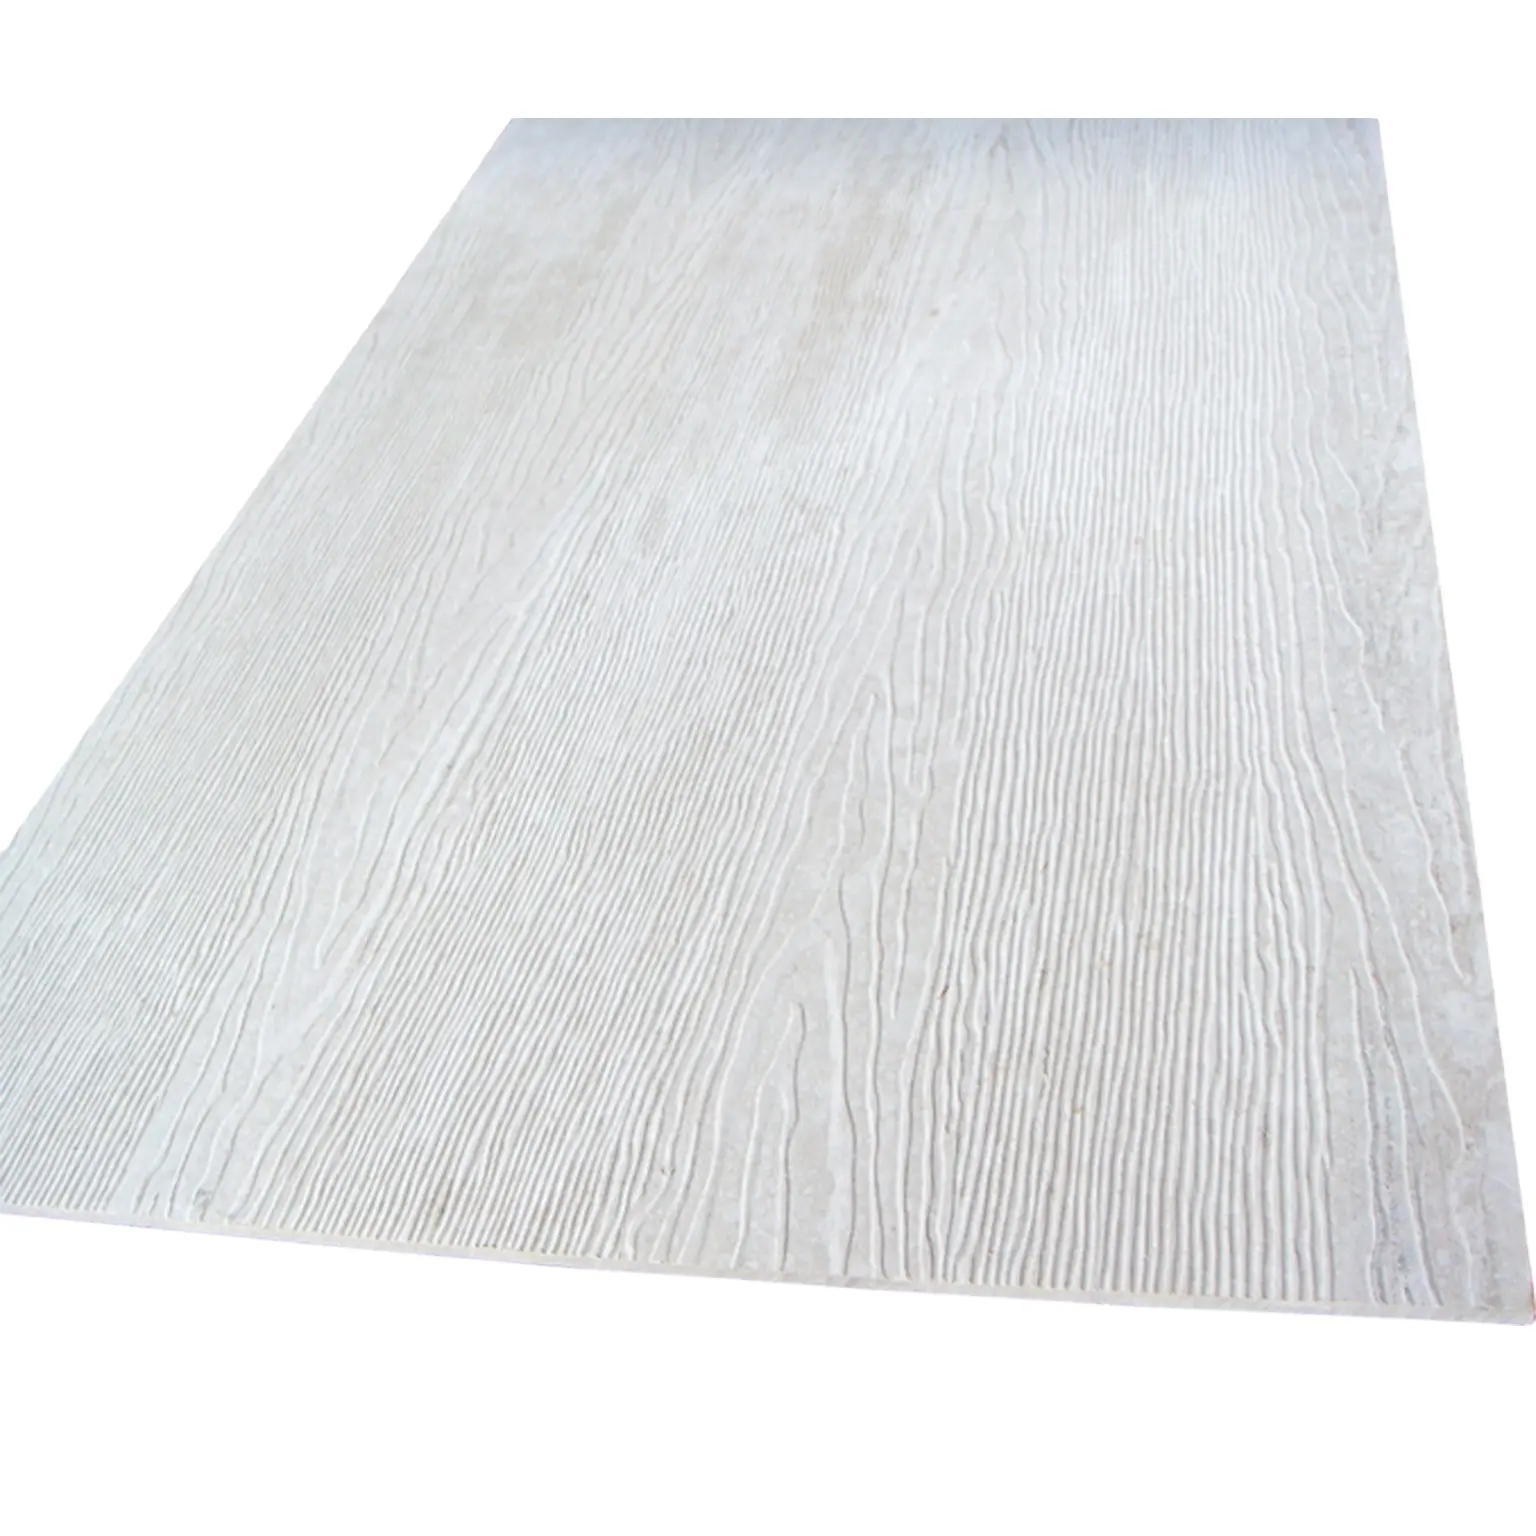 Hot Sale! Wood Grain Fiber Cement Siding/Wood Fibre Cement For Exterior Wall Panels Cladding